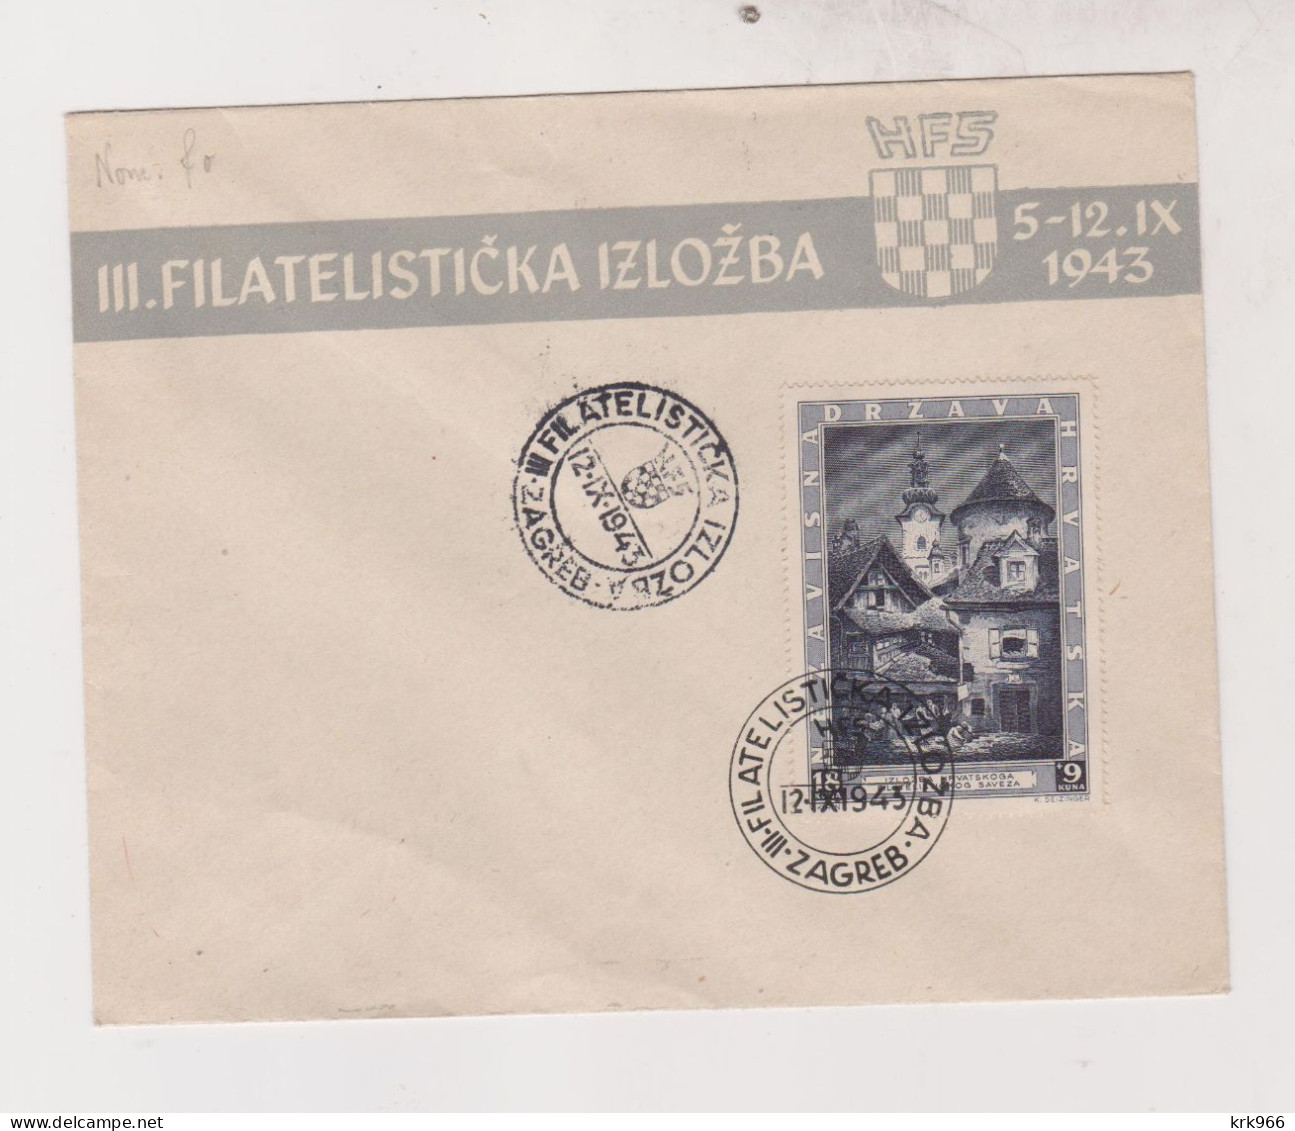 CROATIA WW II, EXPO 1943 FDC Cover  Hand & Machine Cancel - Croazia